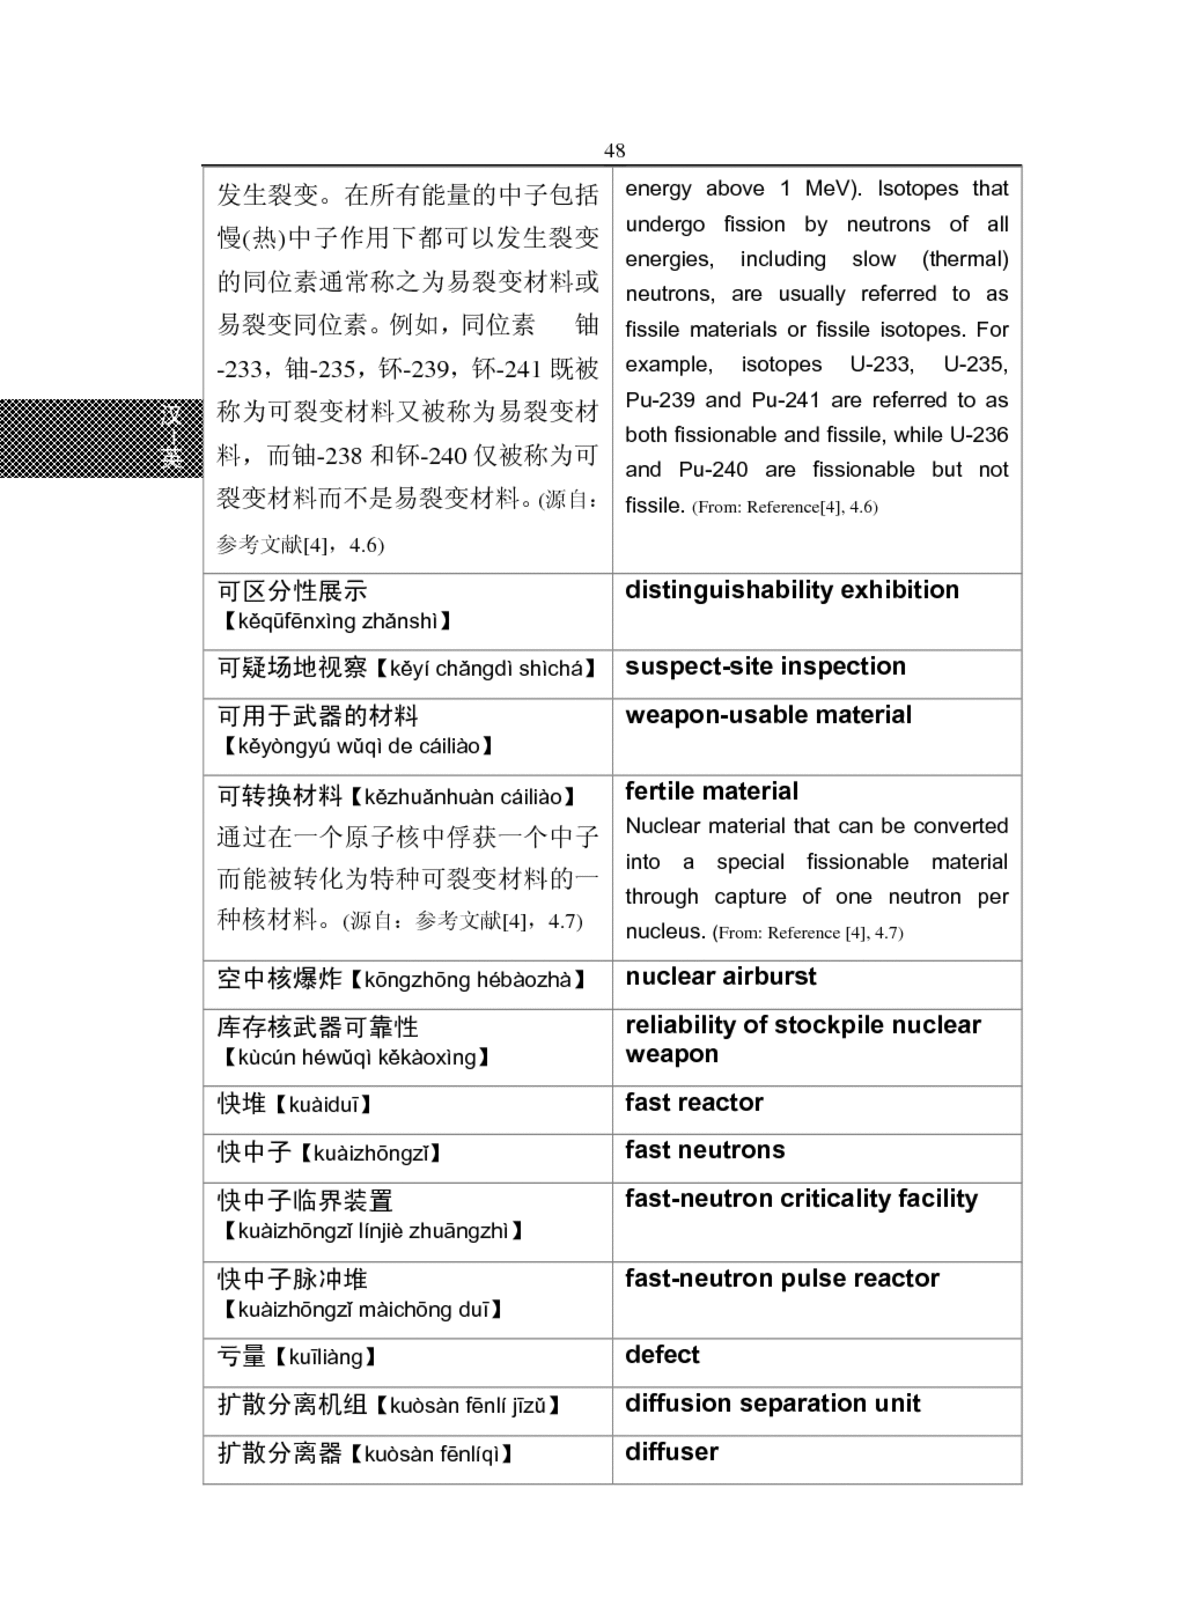 UTF-8 encoding table and Unicode characters